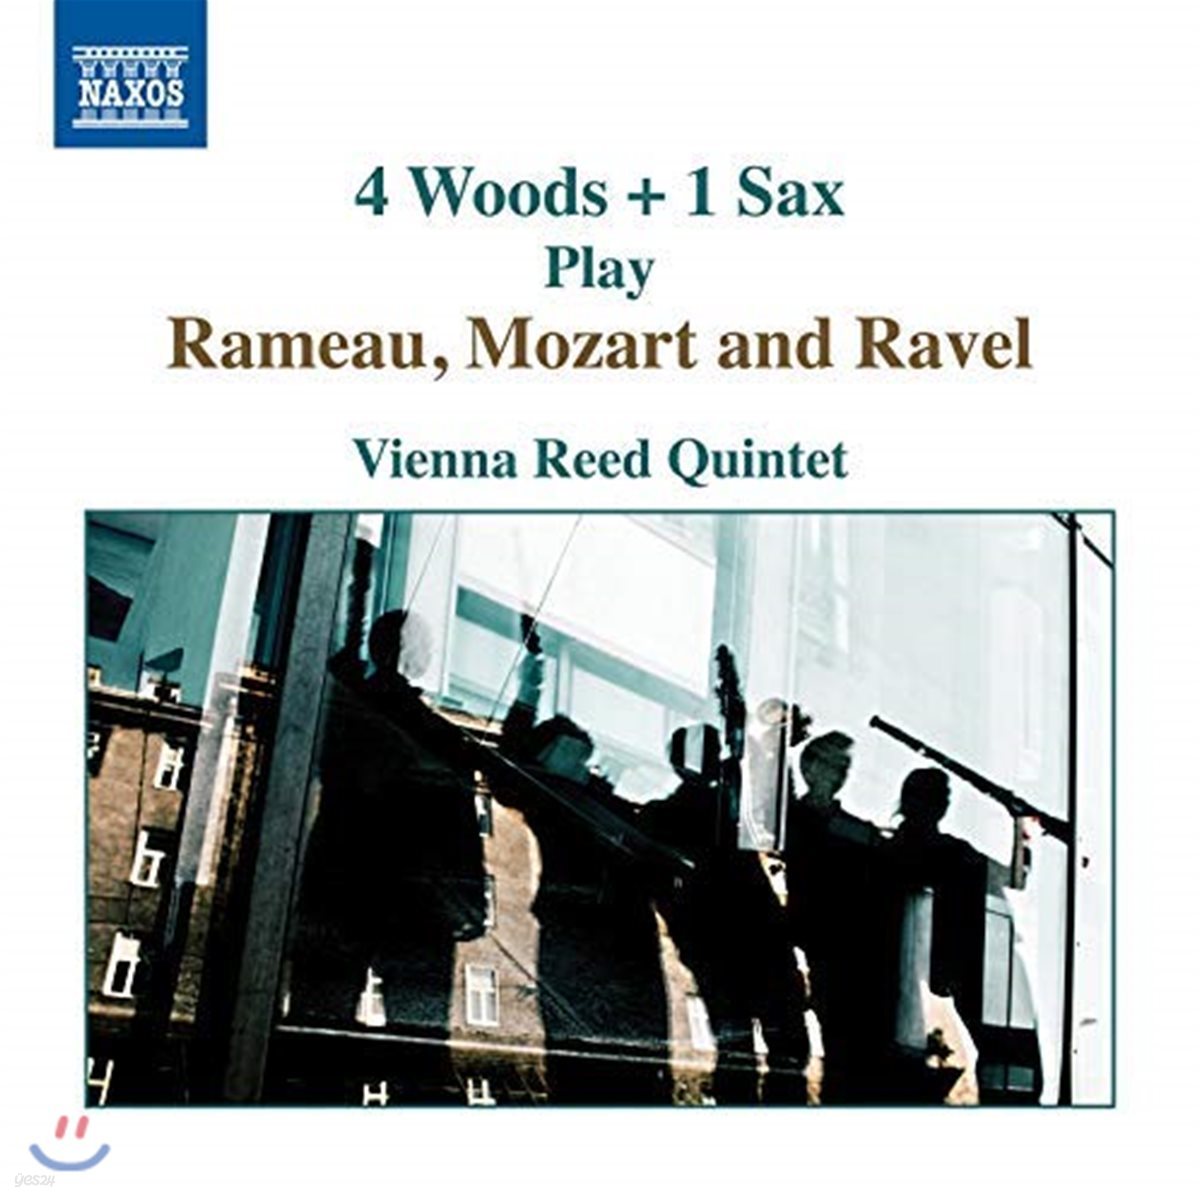 Vienna Reed Quintet 4대의 목관악기, 색소폰이 연주하는 라모, 모차르트, 라벨 작품들 